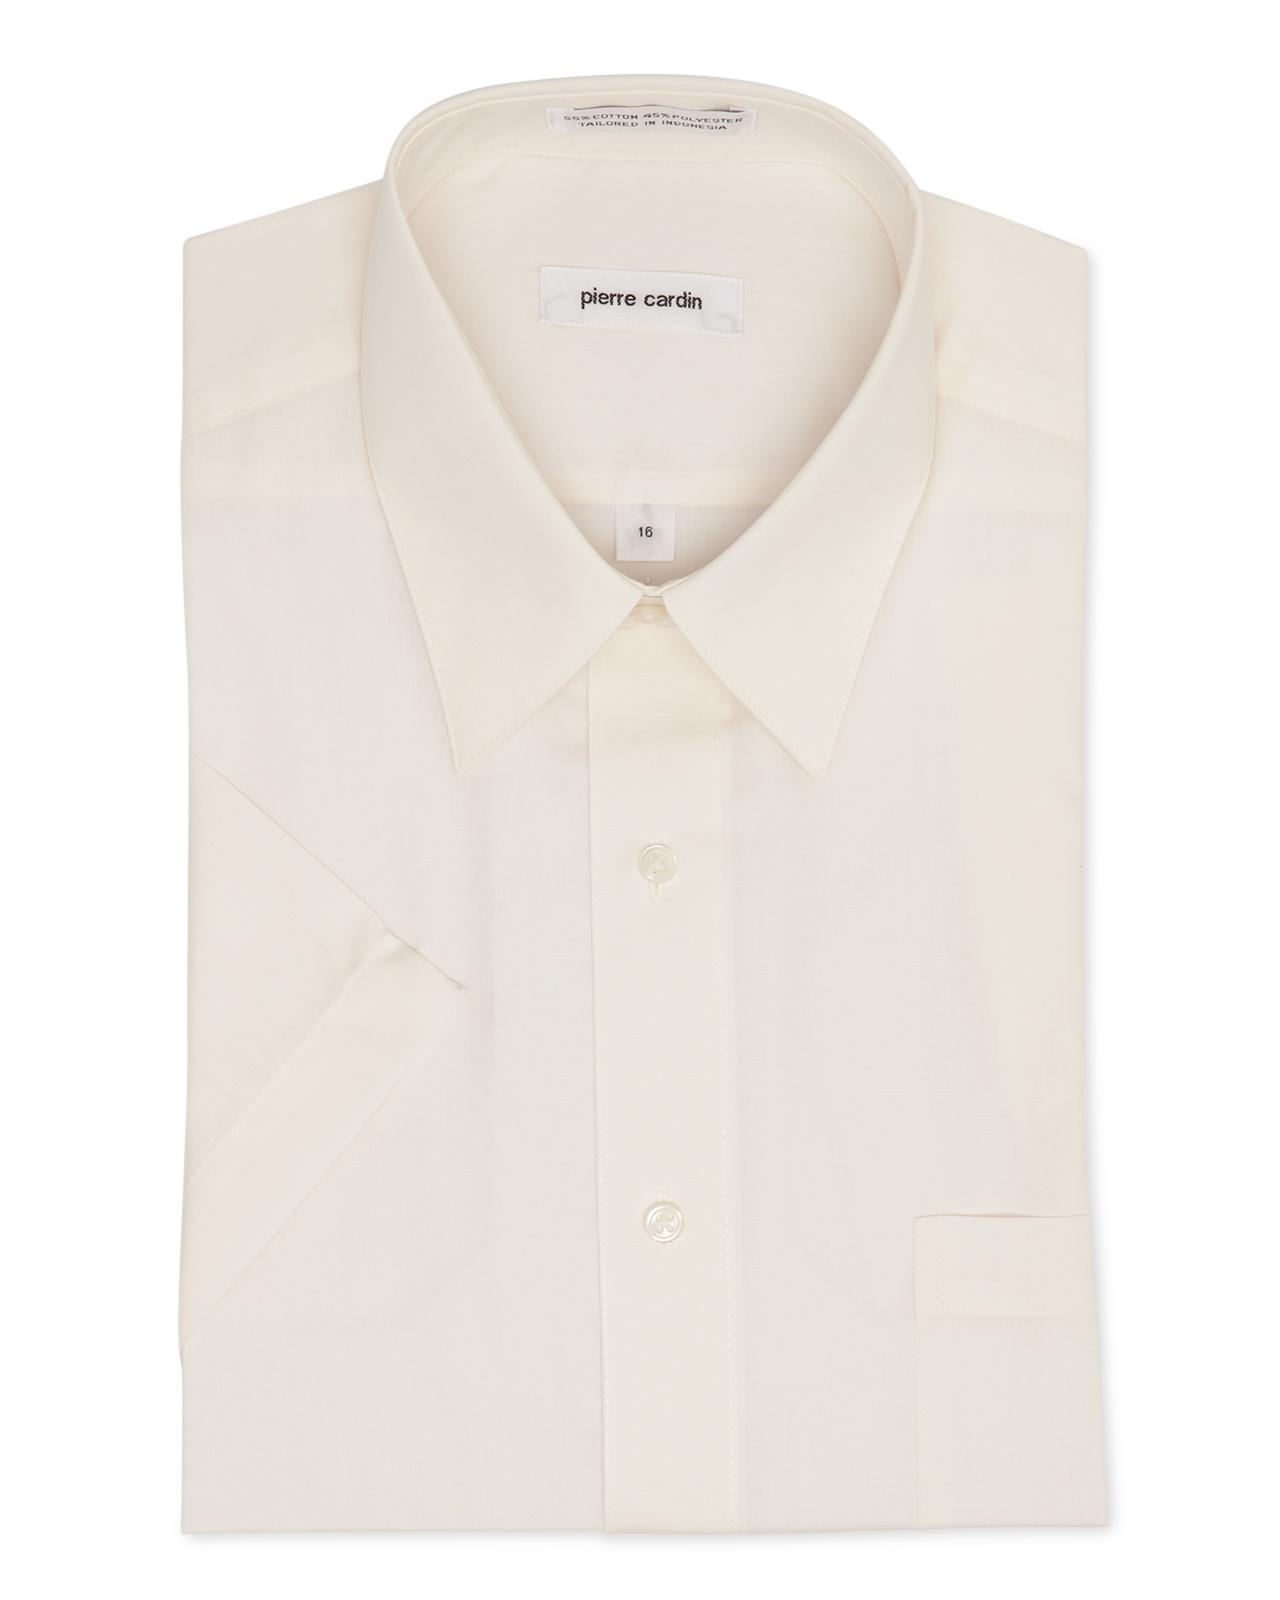 Pierre cardin Short Sleeve Cream Dress Shirt in Beige for Men (Cream ...